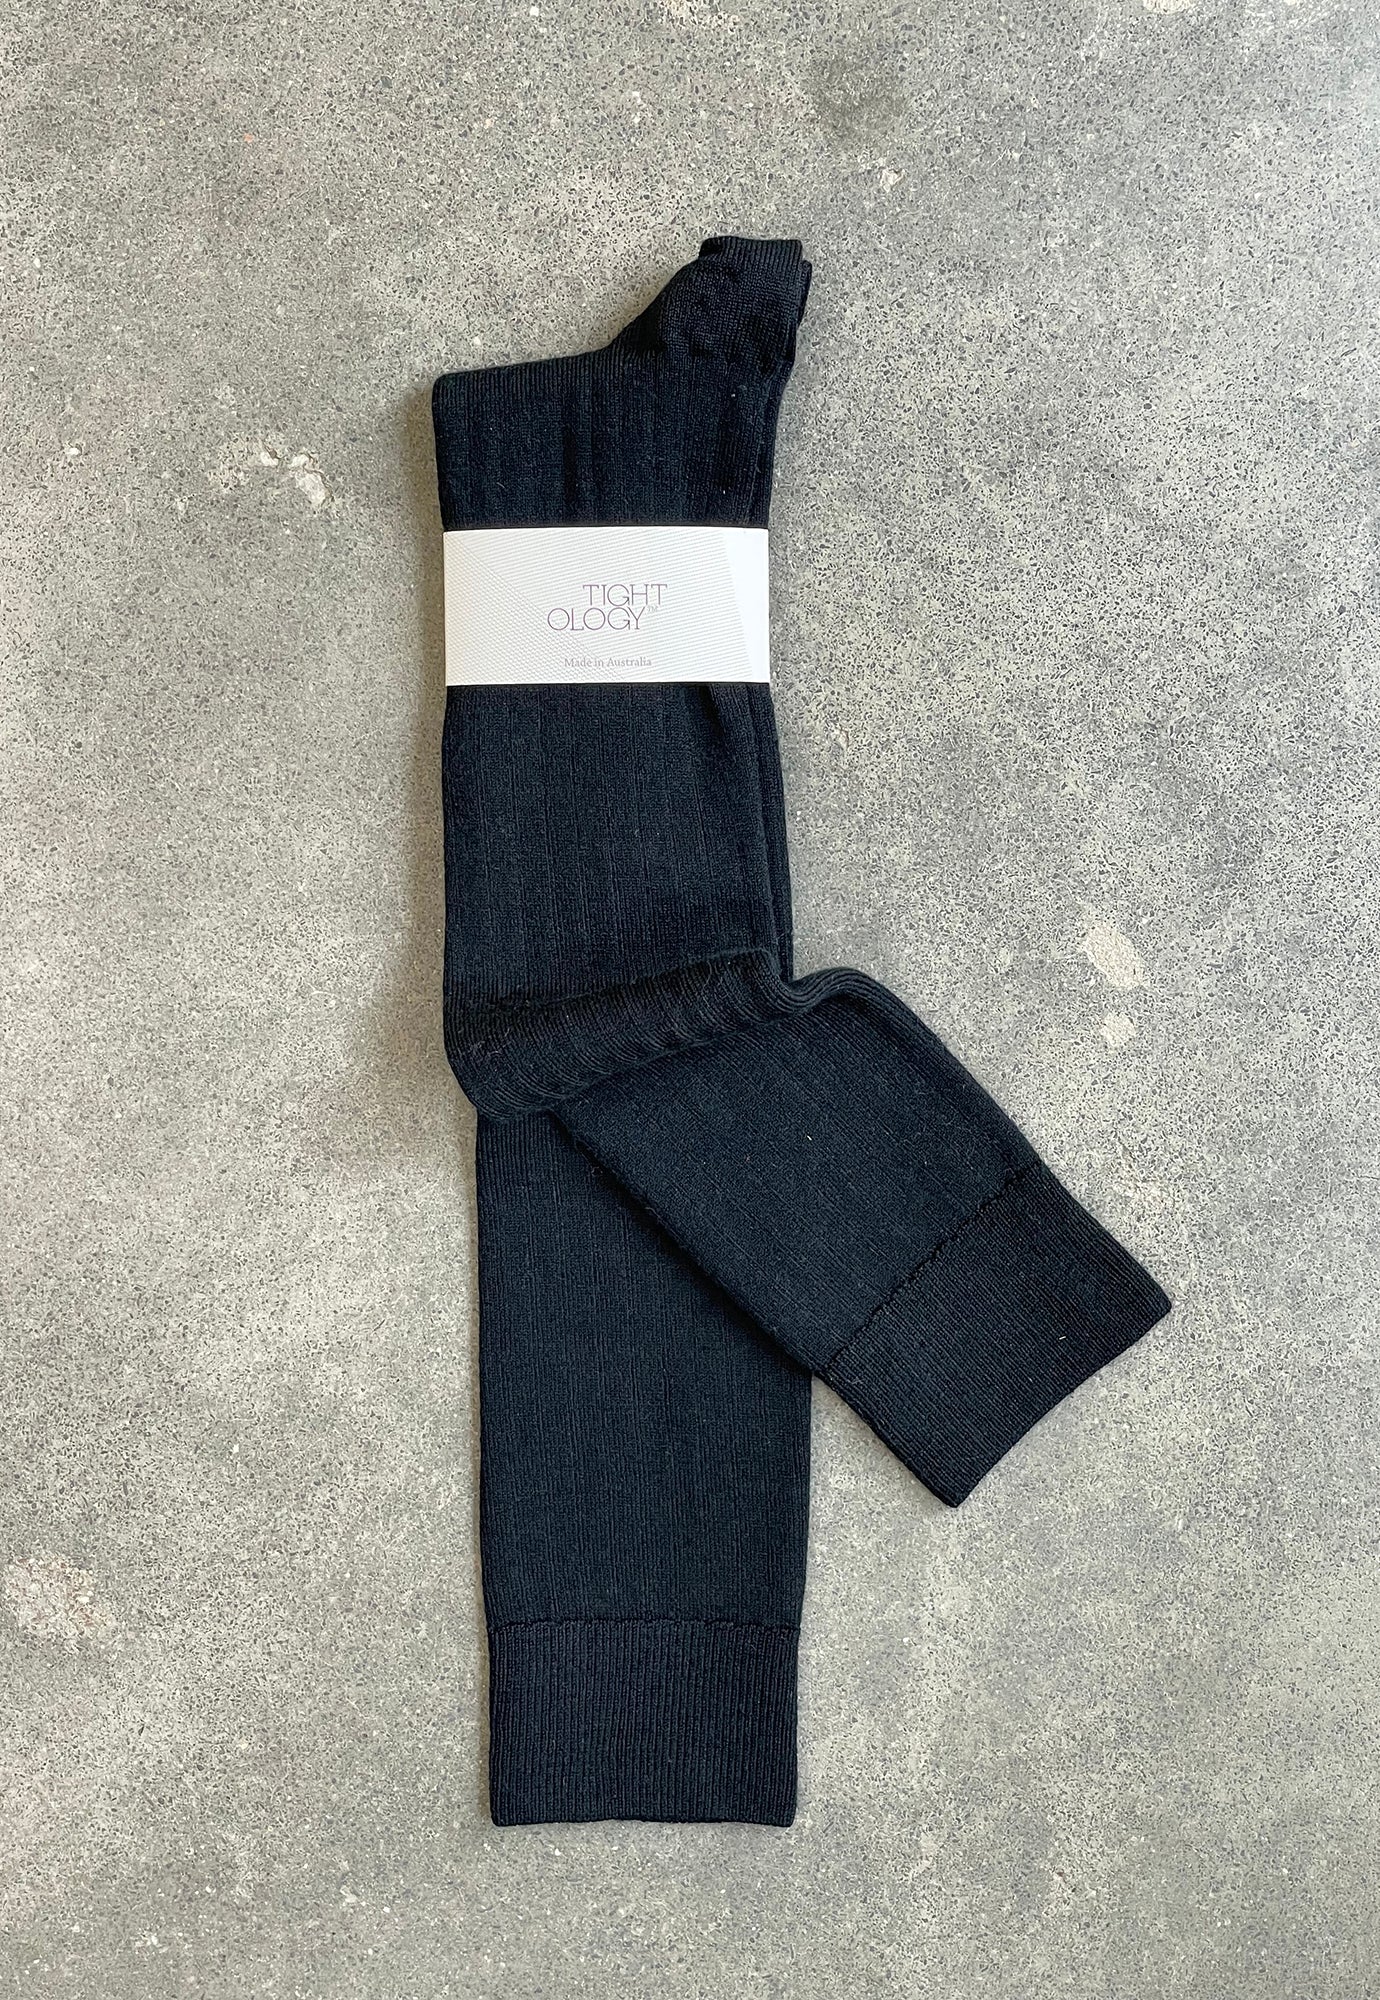 tightology - long rib wool socks